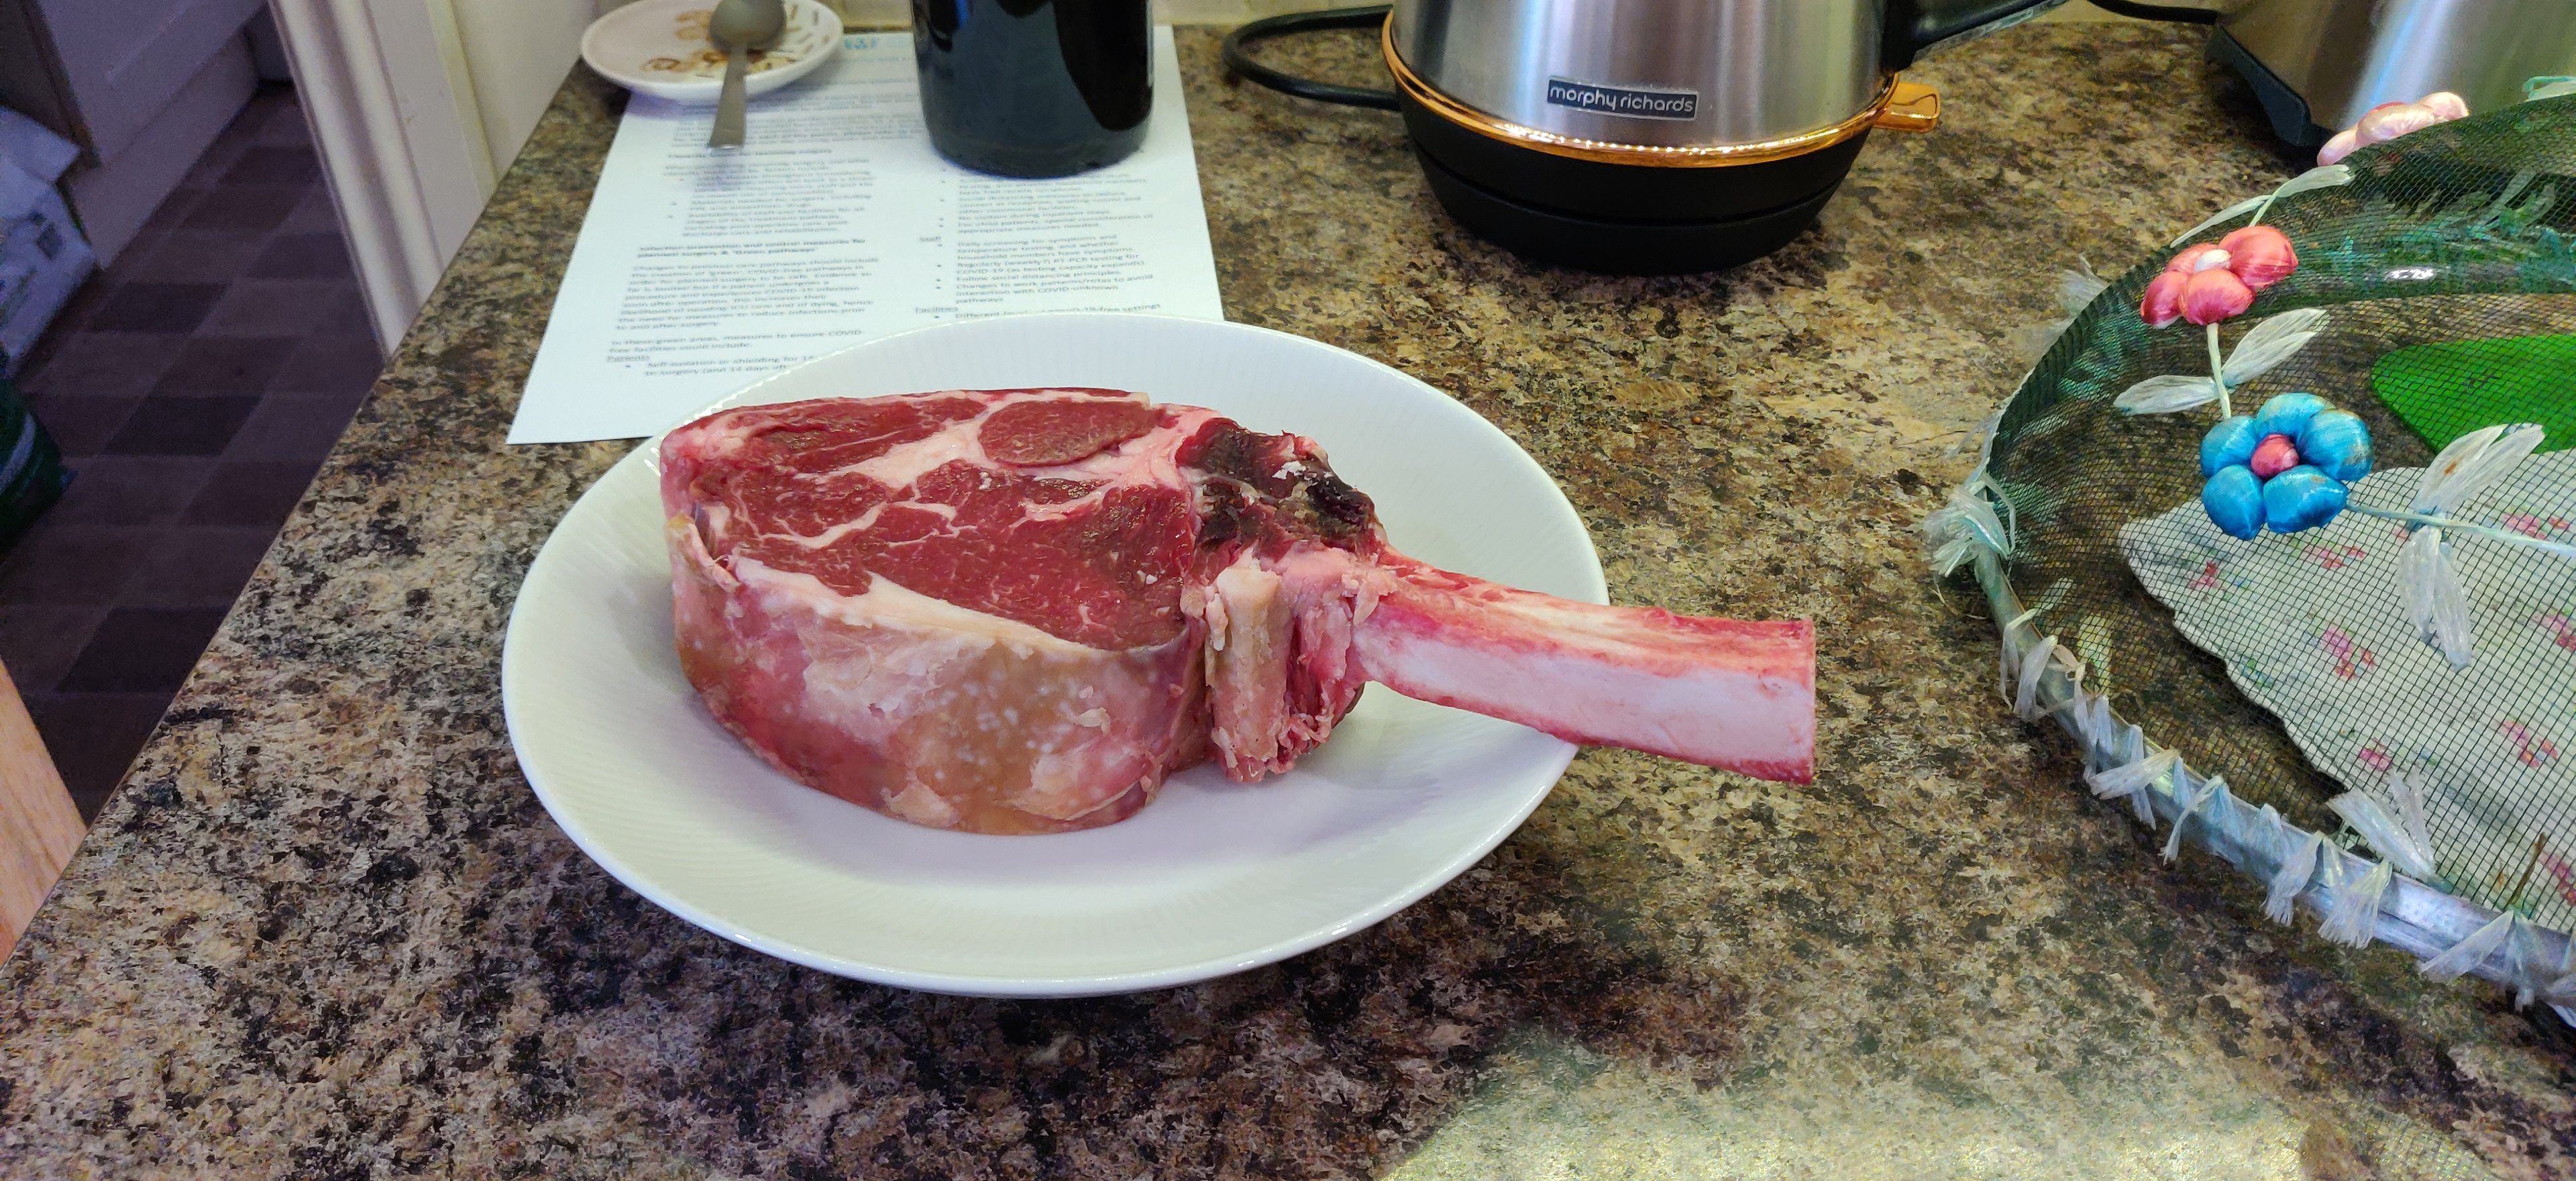 Cooking a tomahawk steak  - Page 2 - Food, Drink & Restaurants - PistonHeads